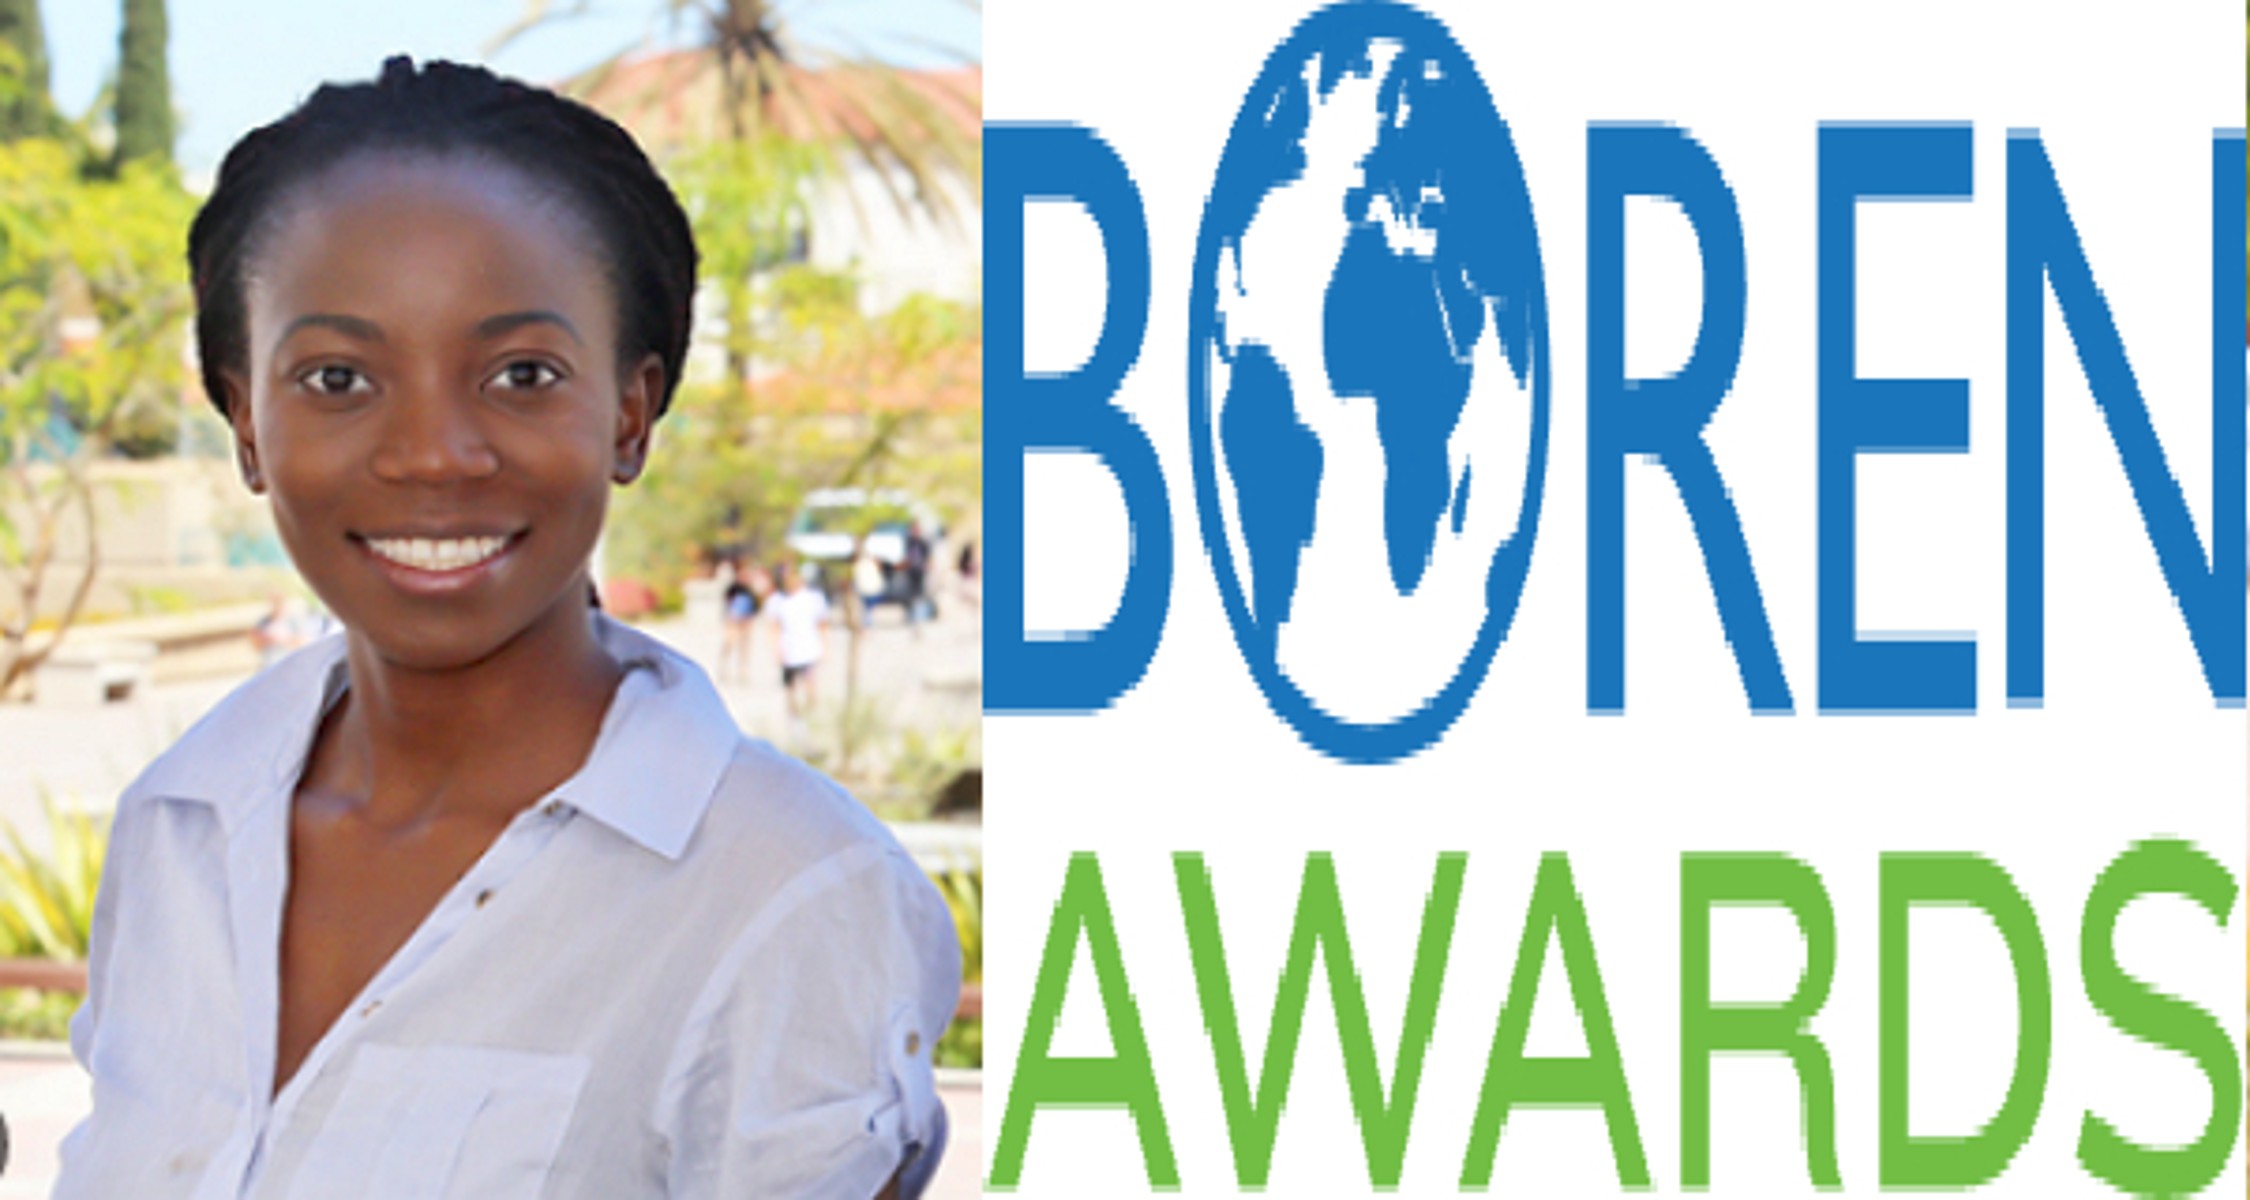 Boren Awards 2024 for International Study Abroad